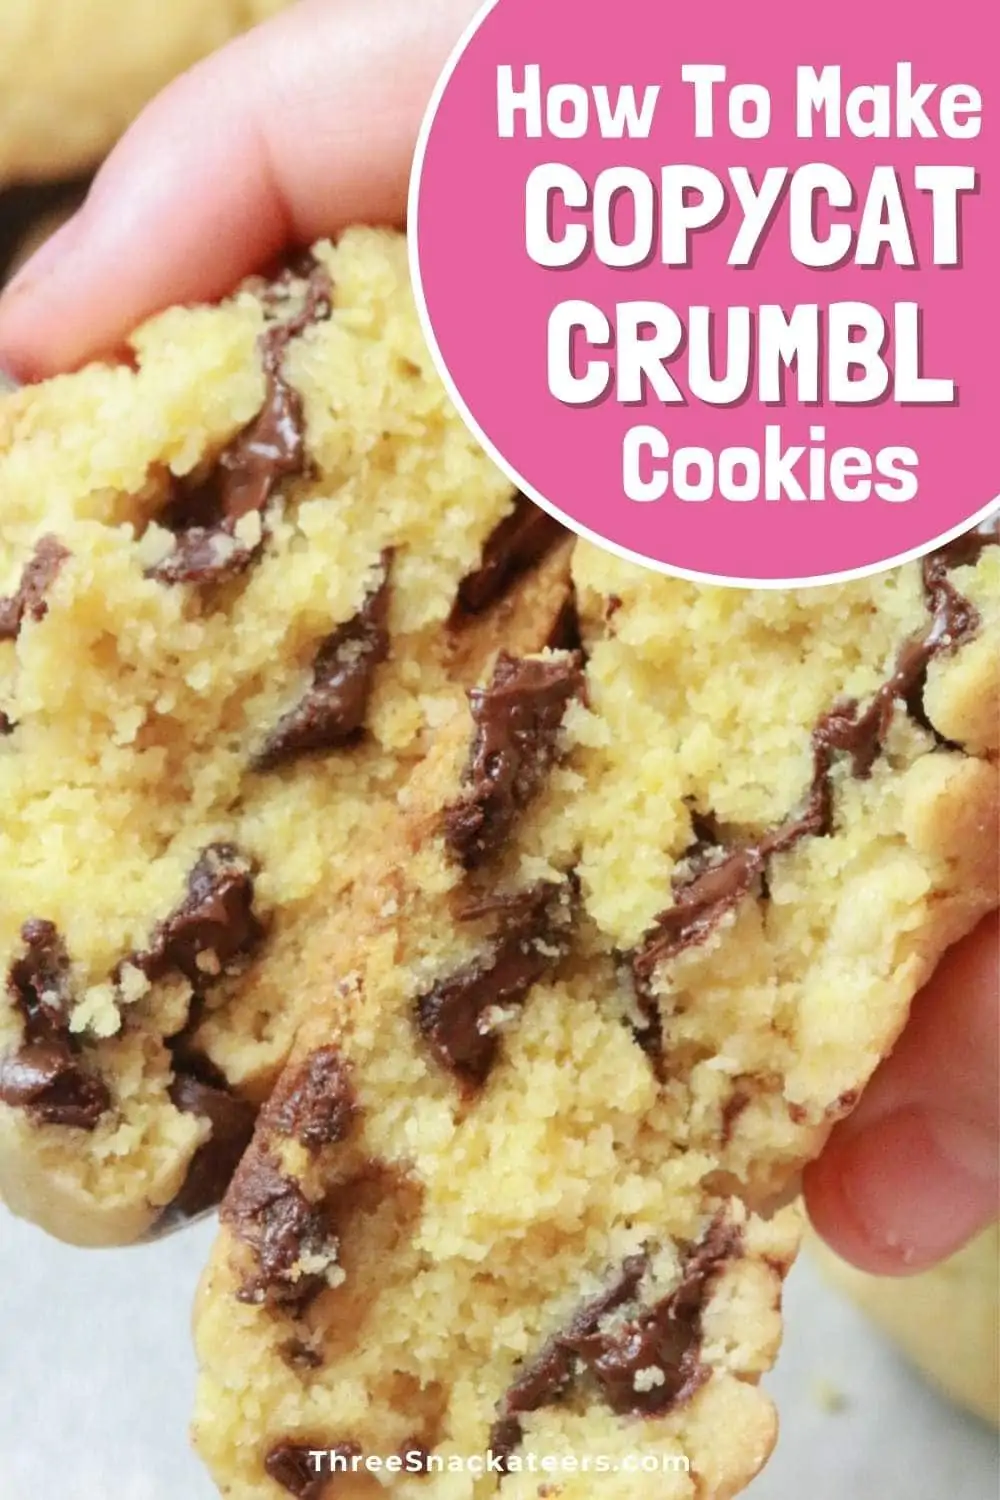 Copycat Crumbl Chocolate Chip Cookies Recipe The Three Snackateers 1586